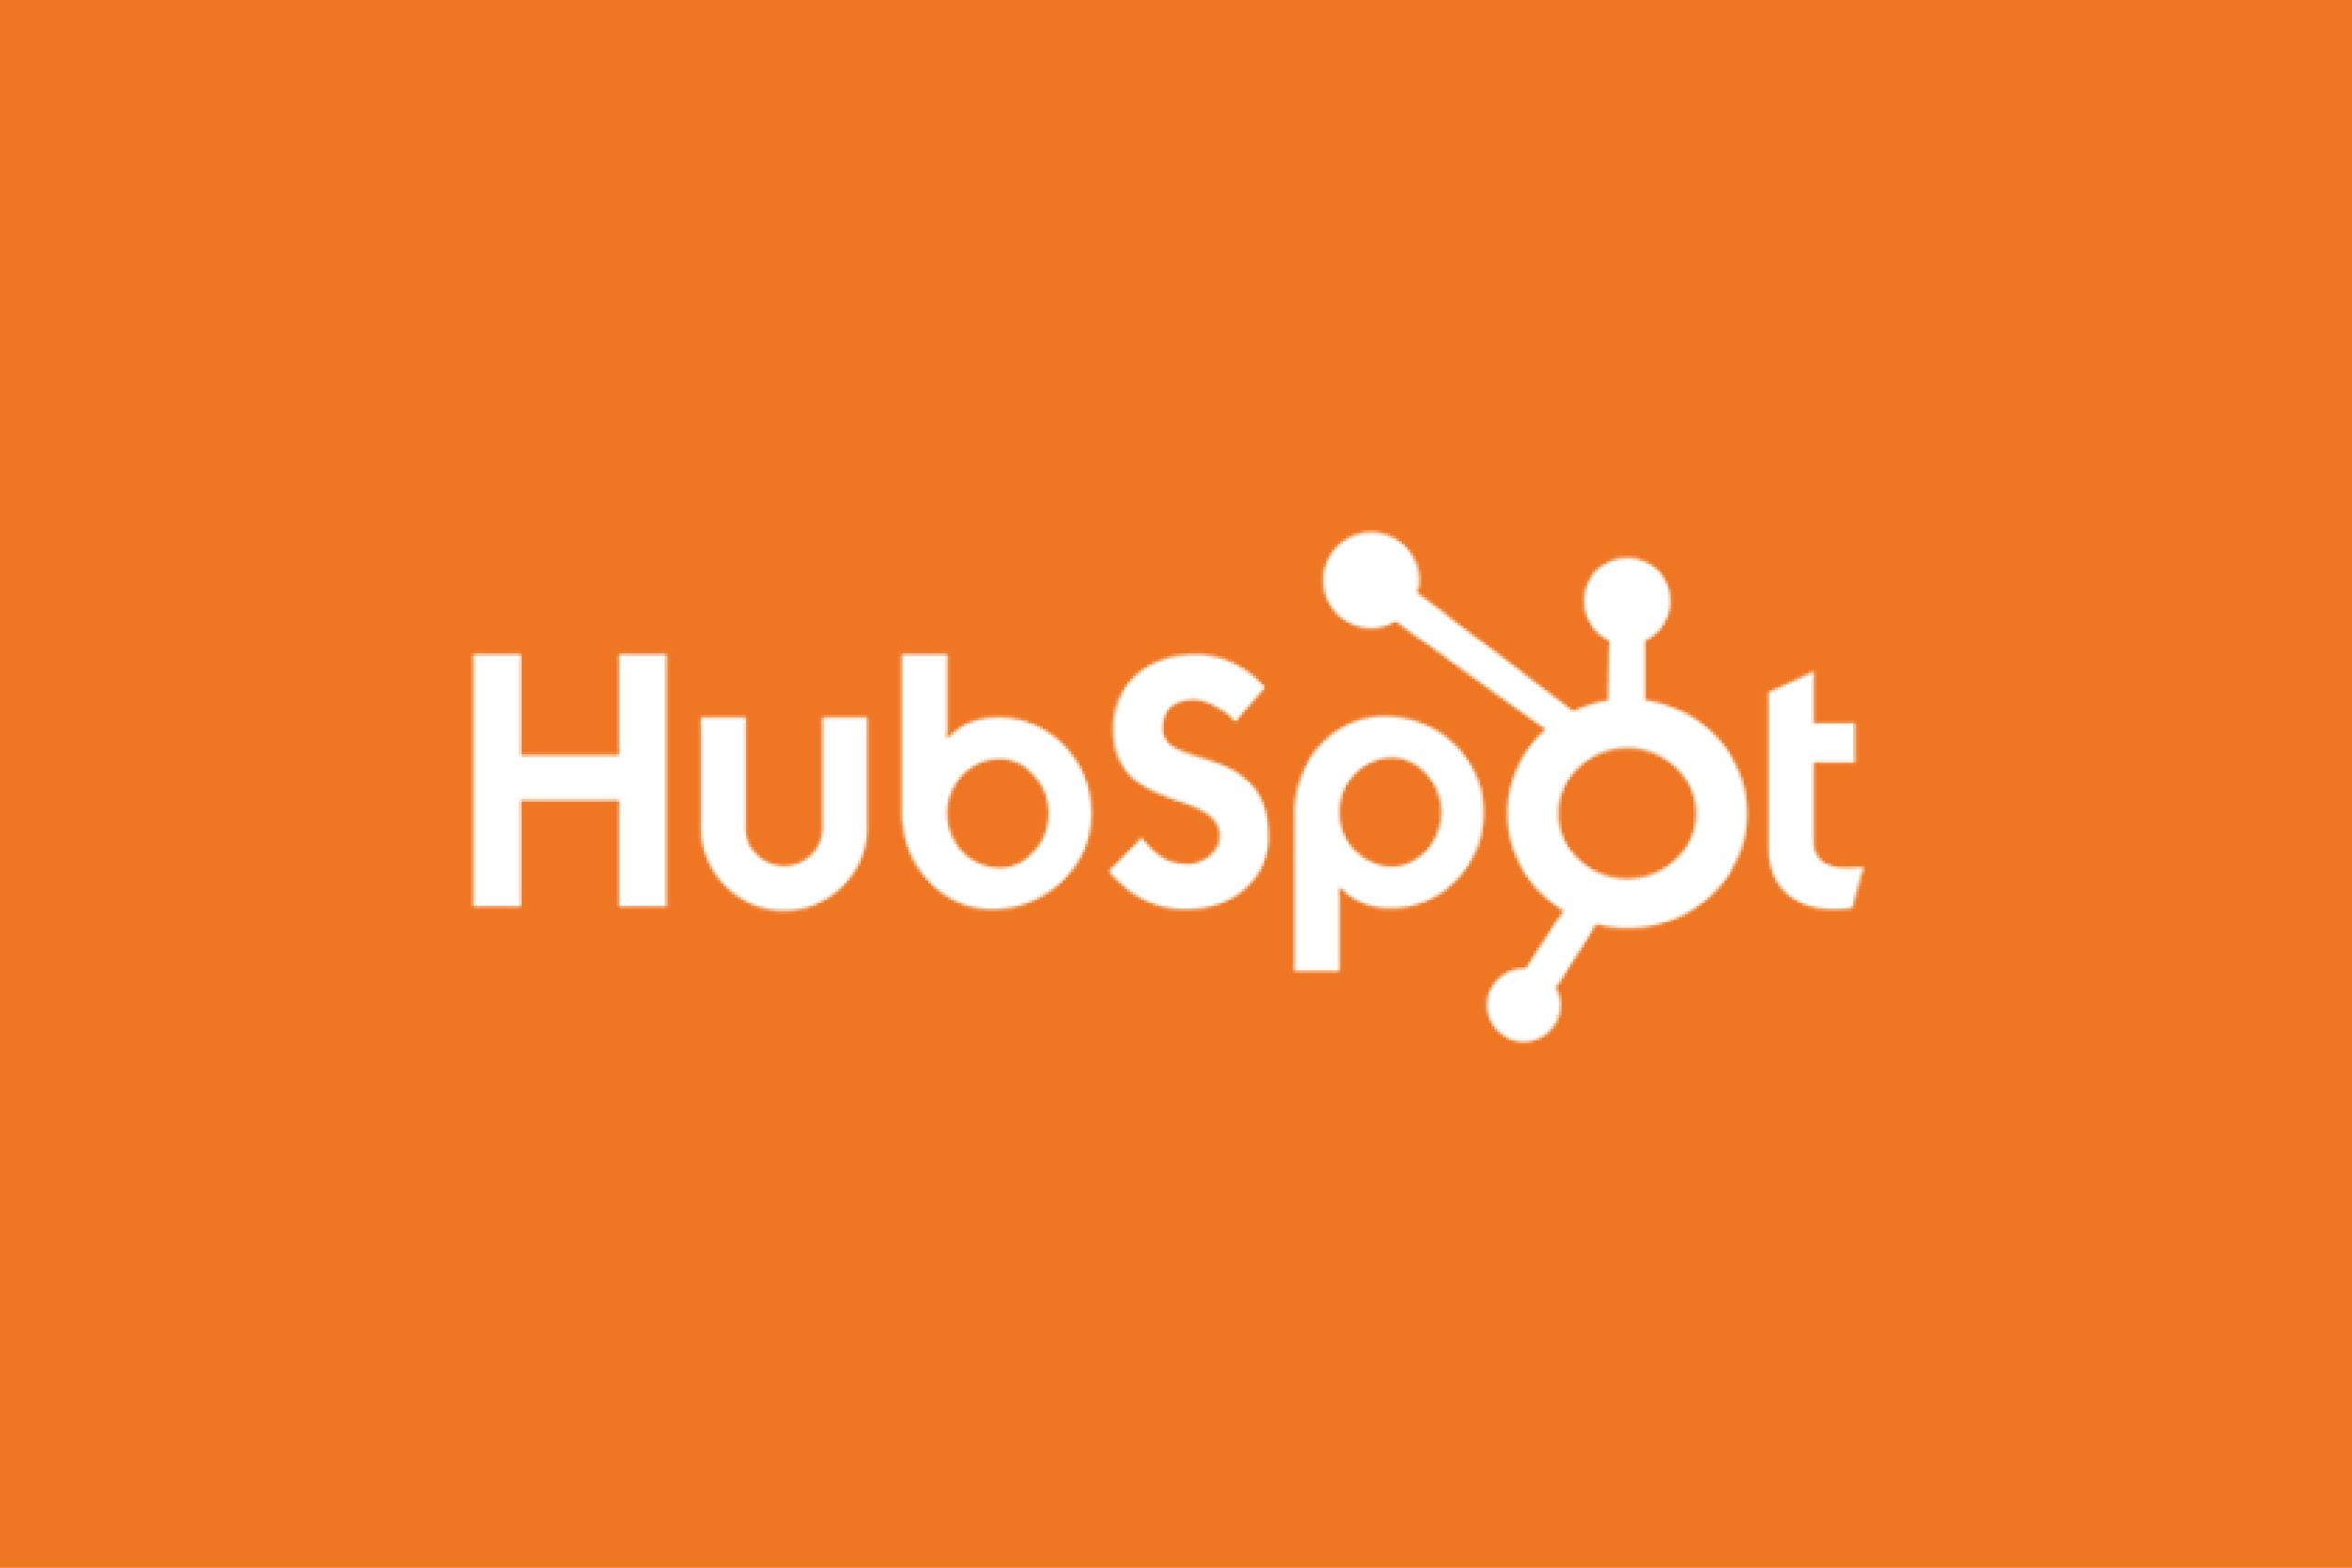 hubspot Logo